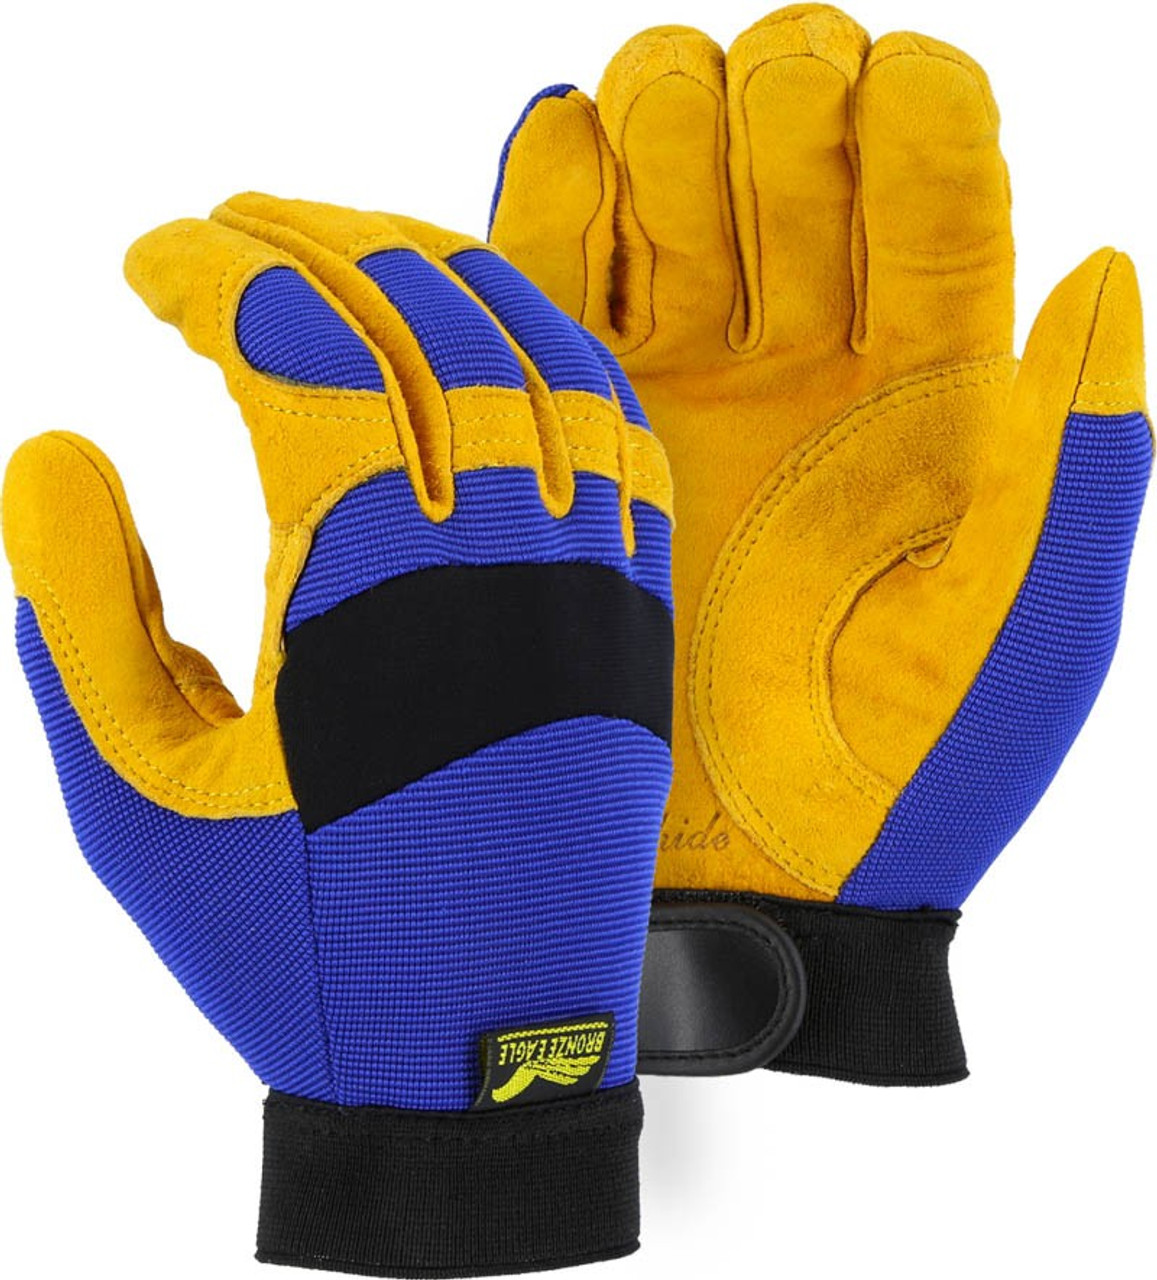 Majestic Glove 2123 Knucklehead Mechanics Glove